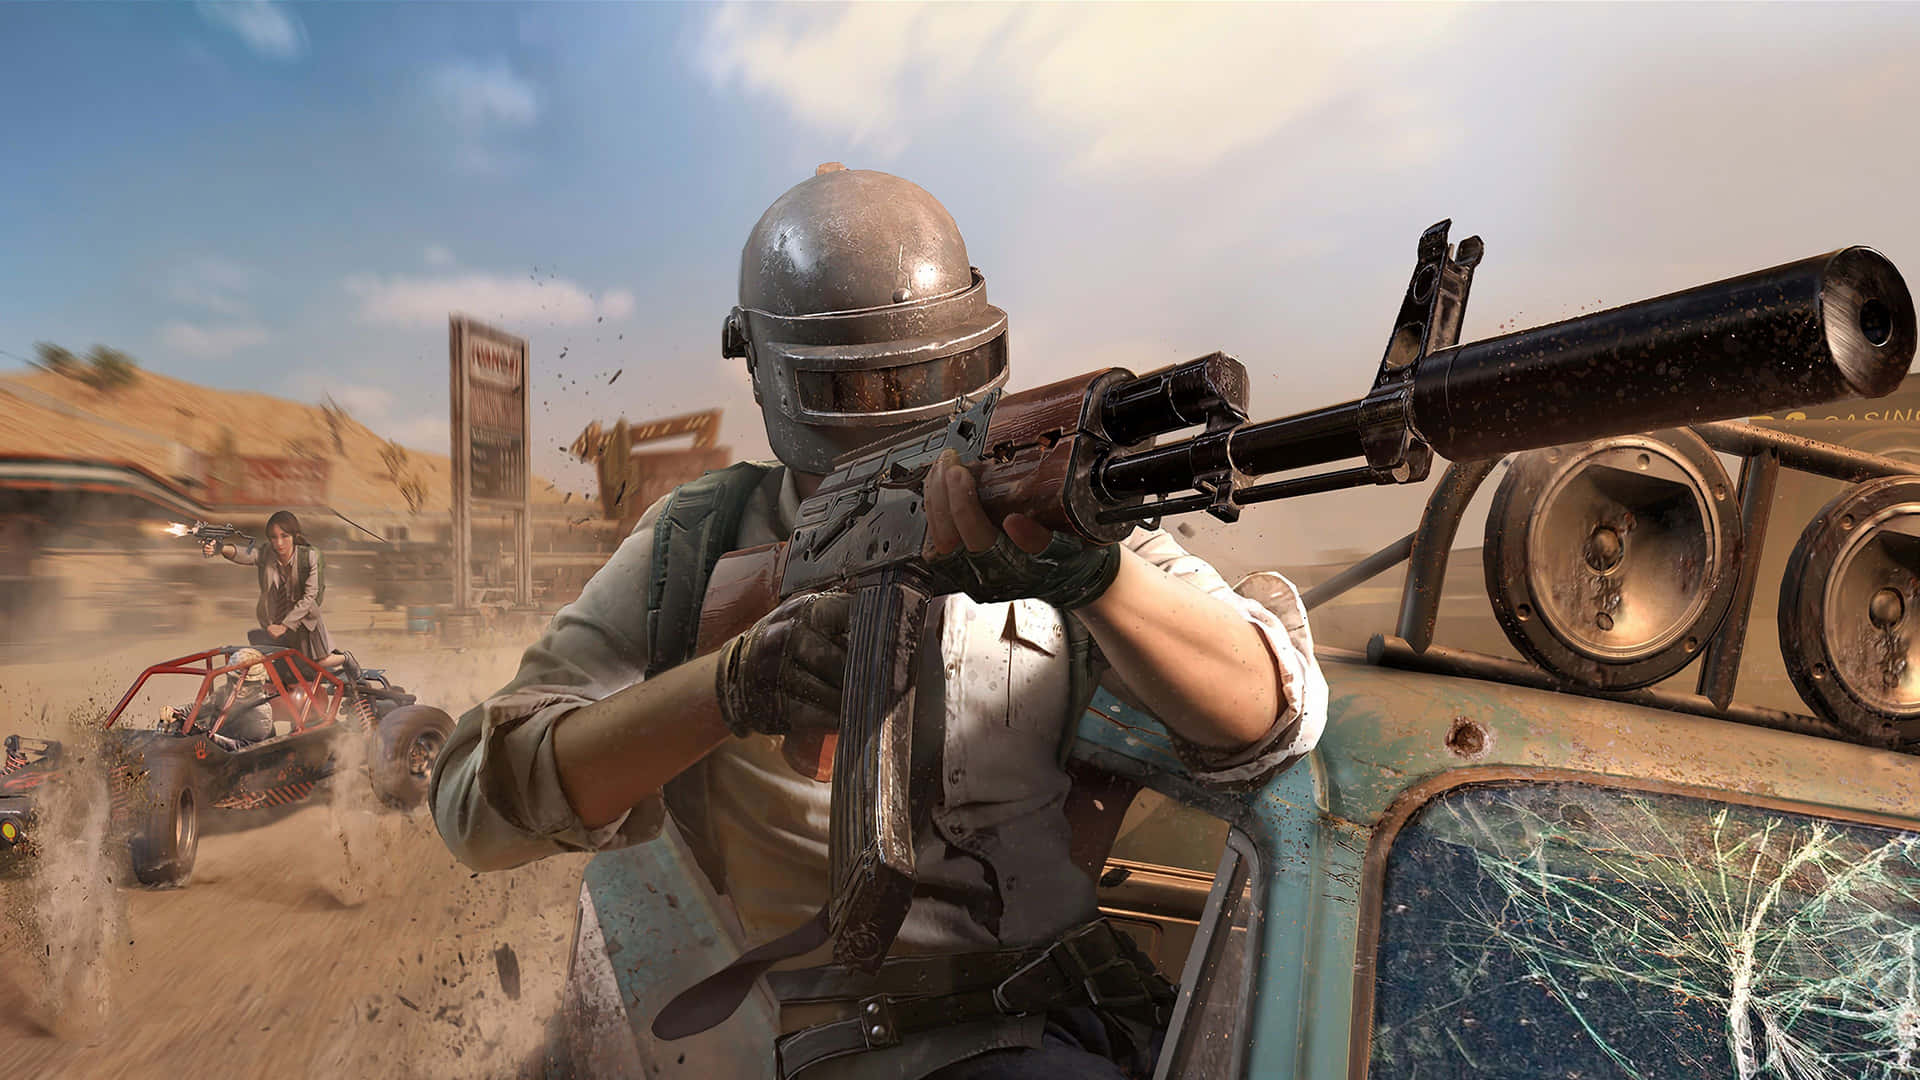 Player Unknown Battlegrounds Helmet Character With Gun Wallpaper